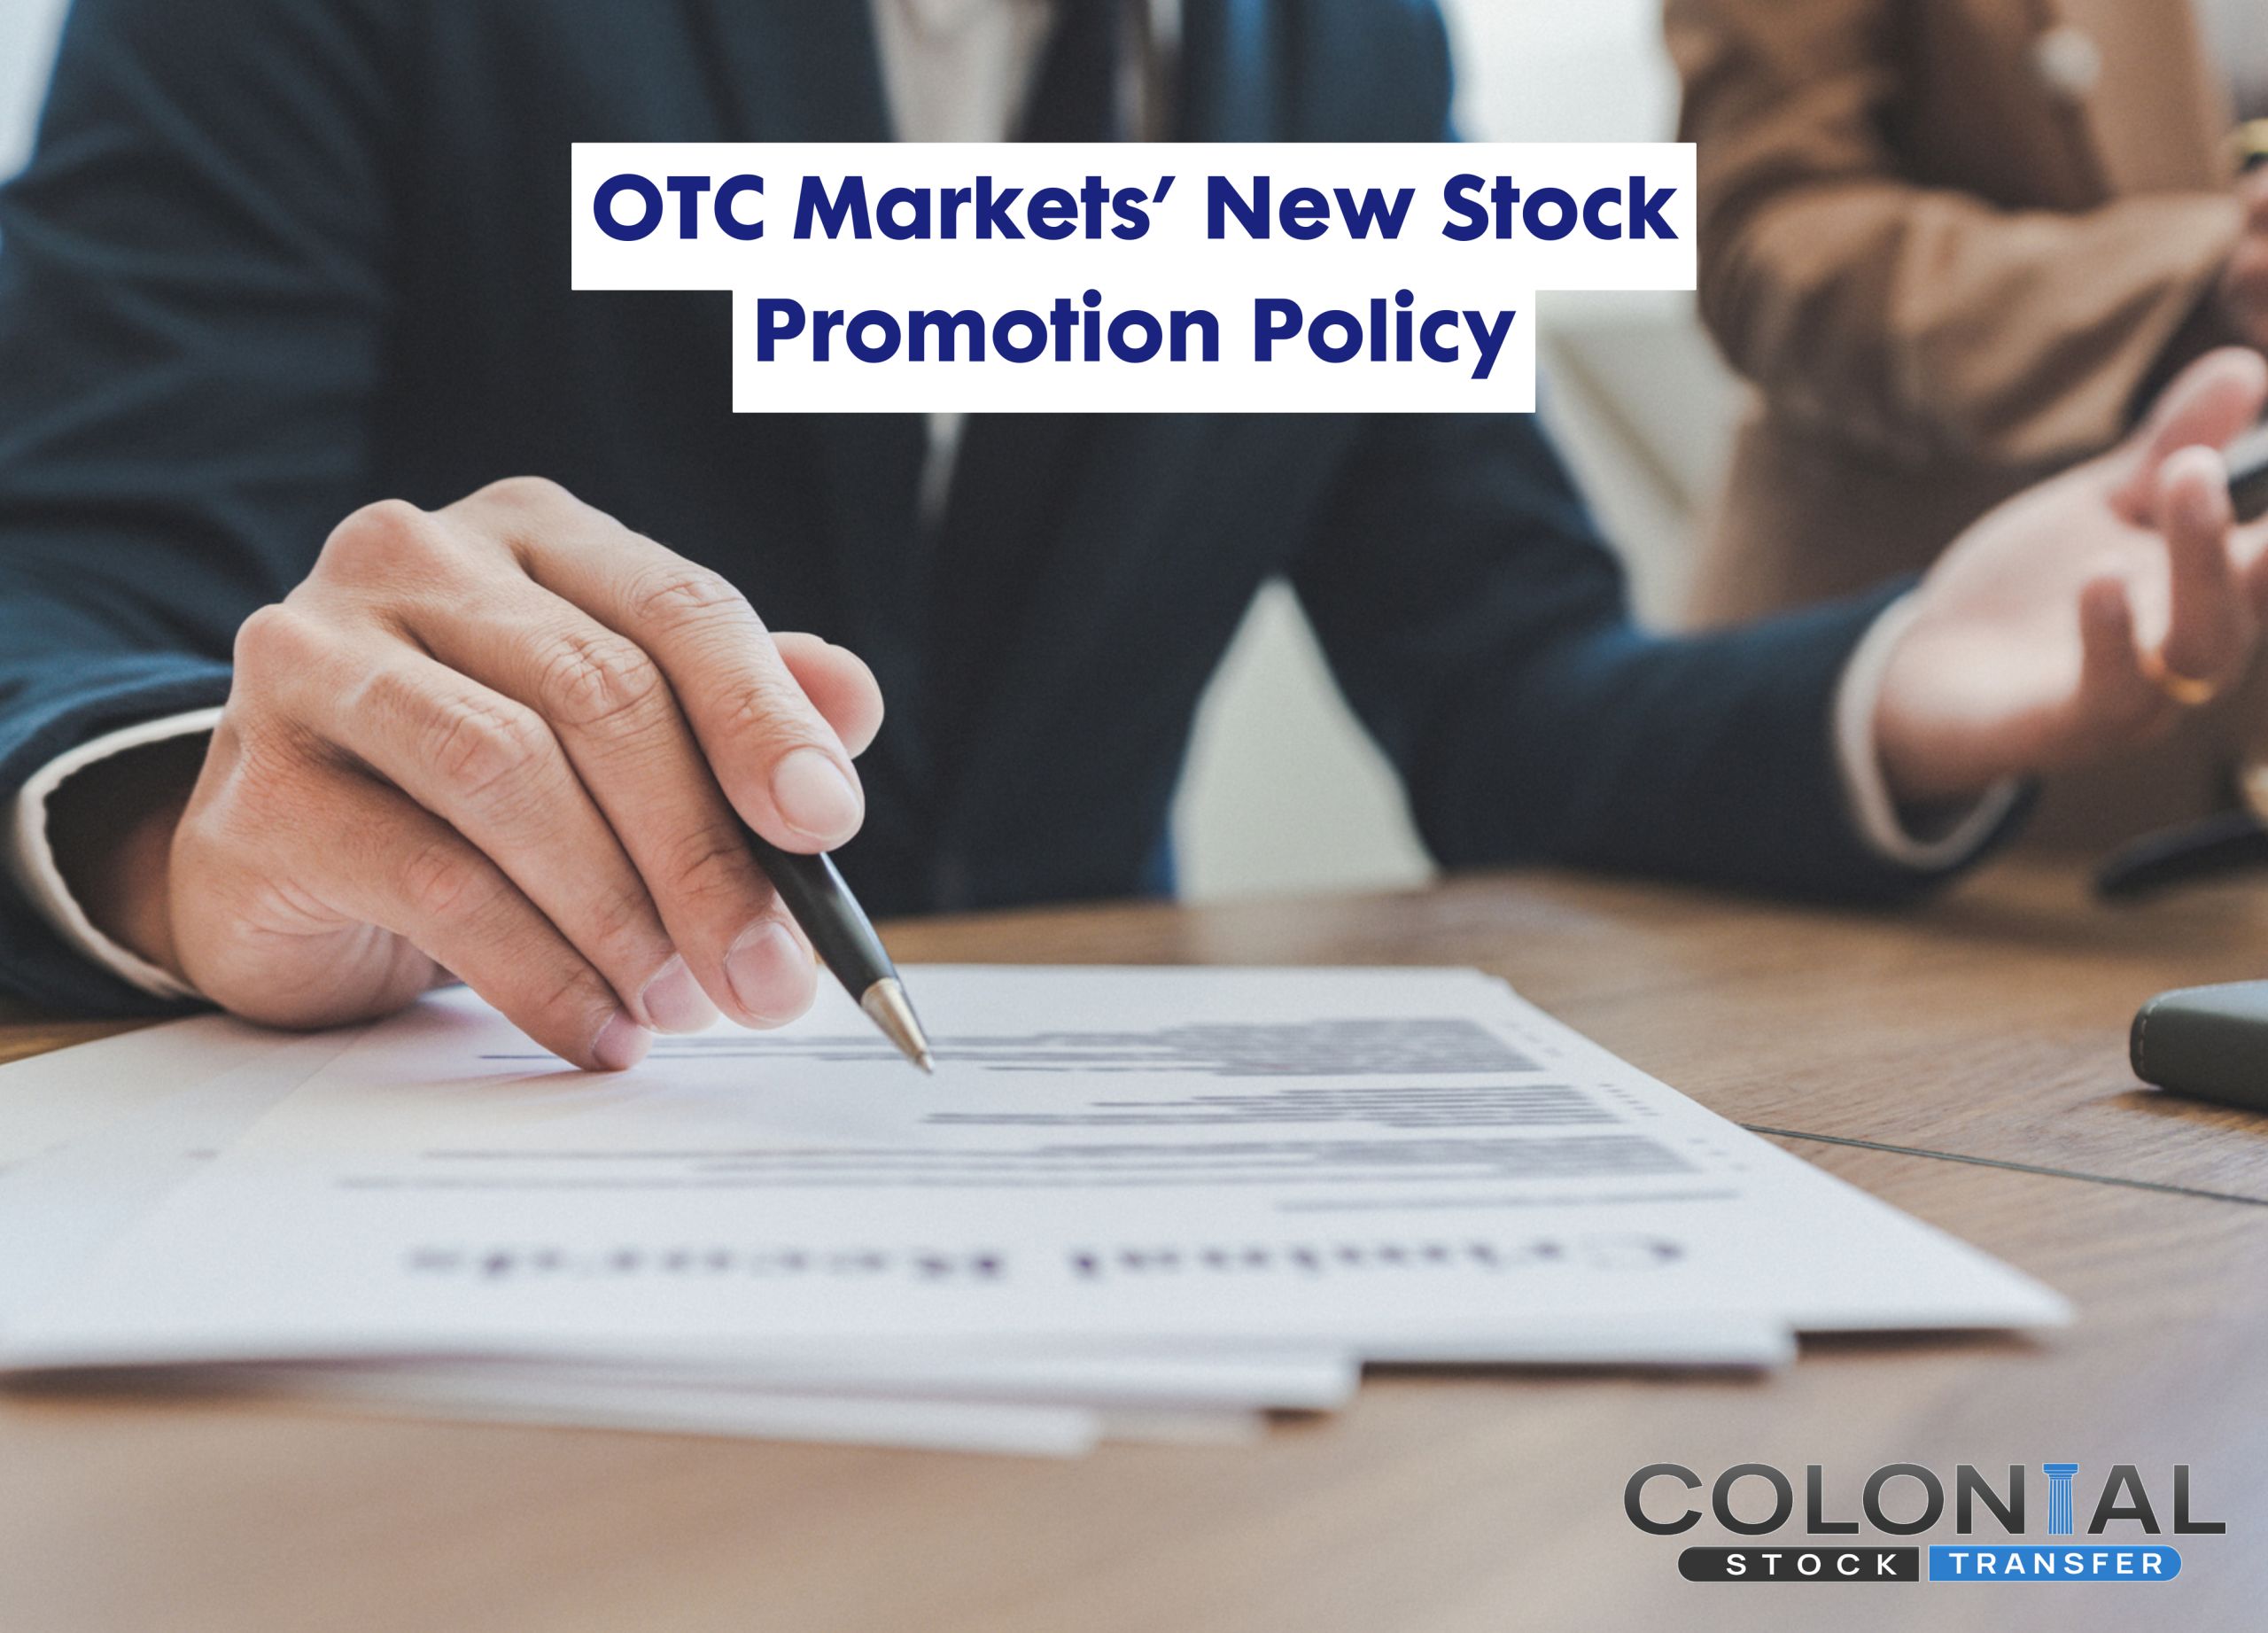 OTC Markets’ New Stock Promotion Policy